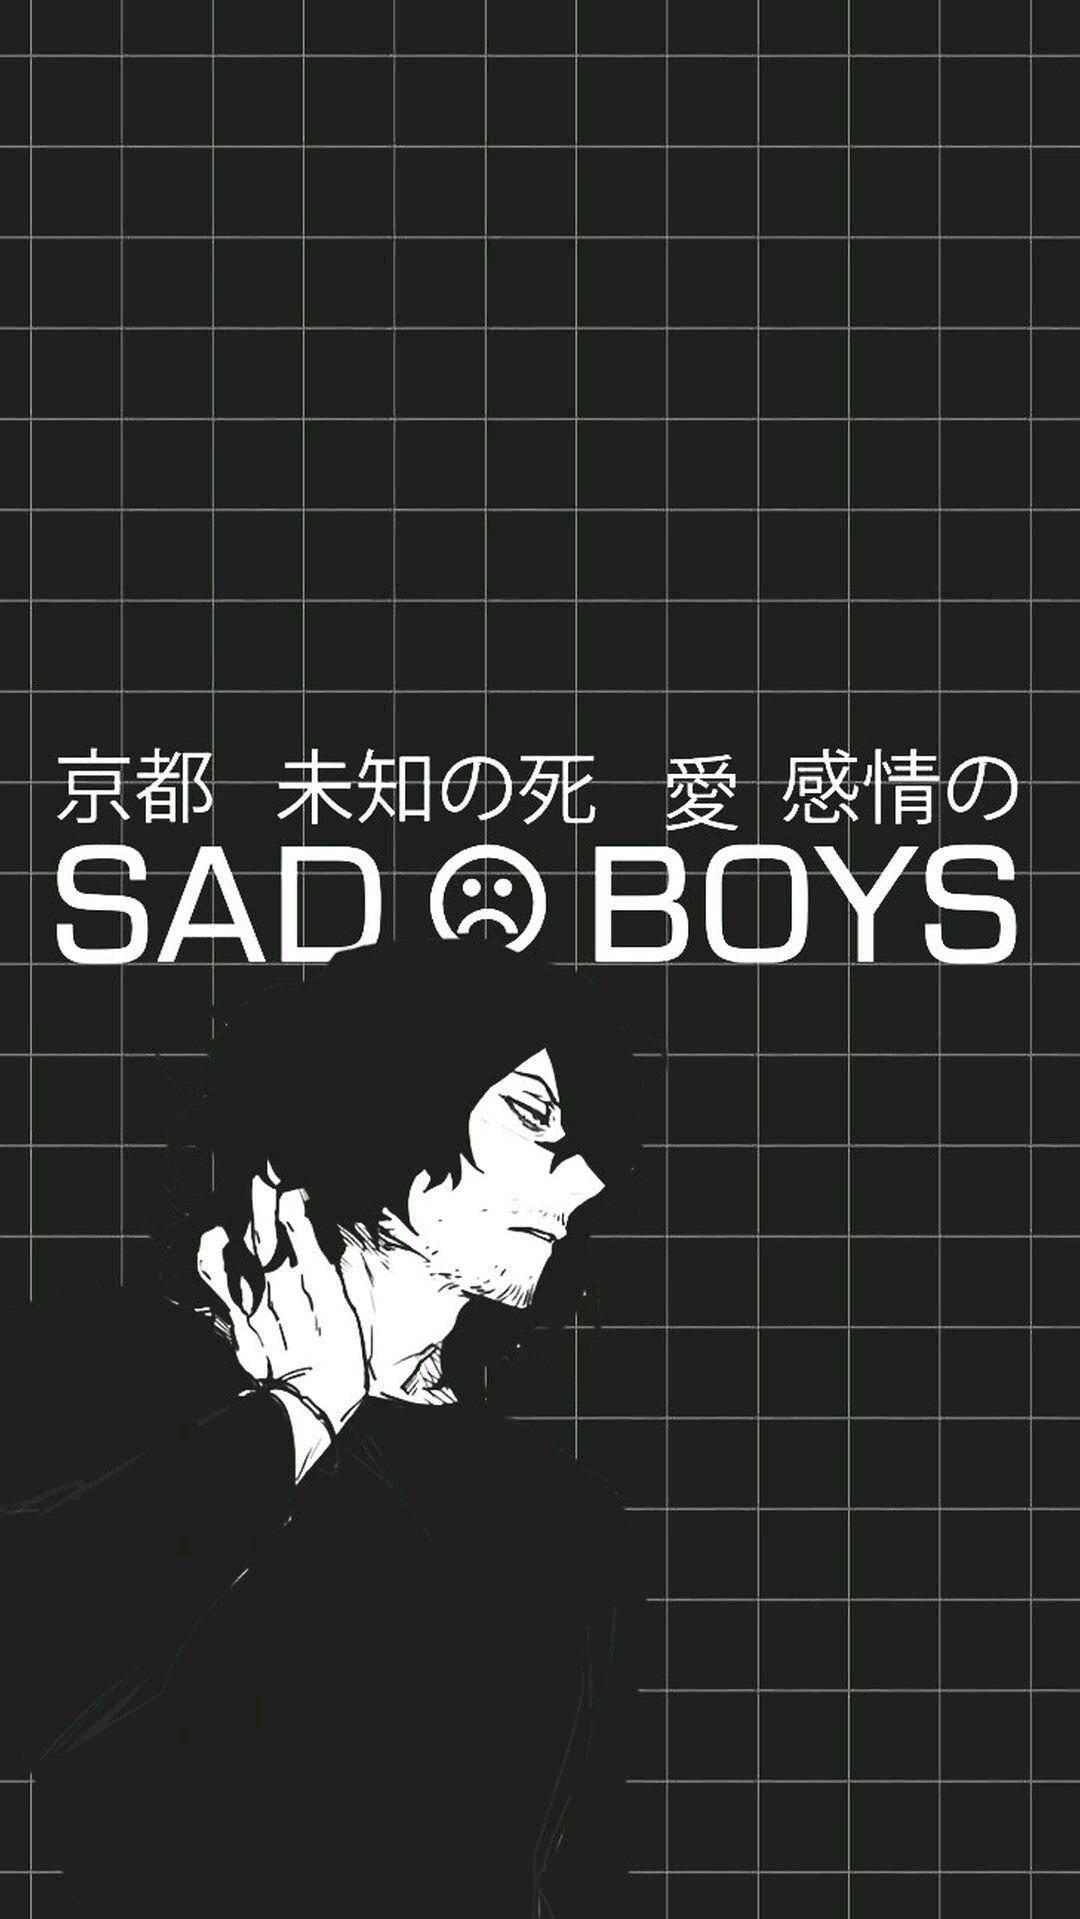 Dark Anime Boy iPhone Wallpaper 1080x1920